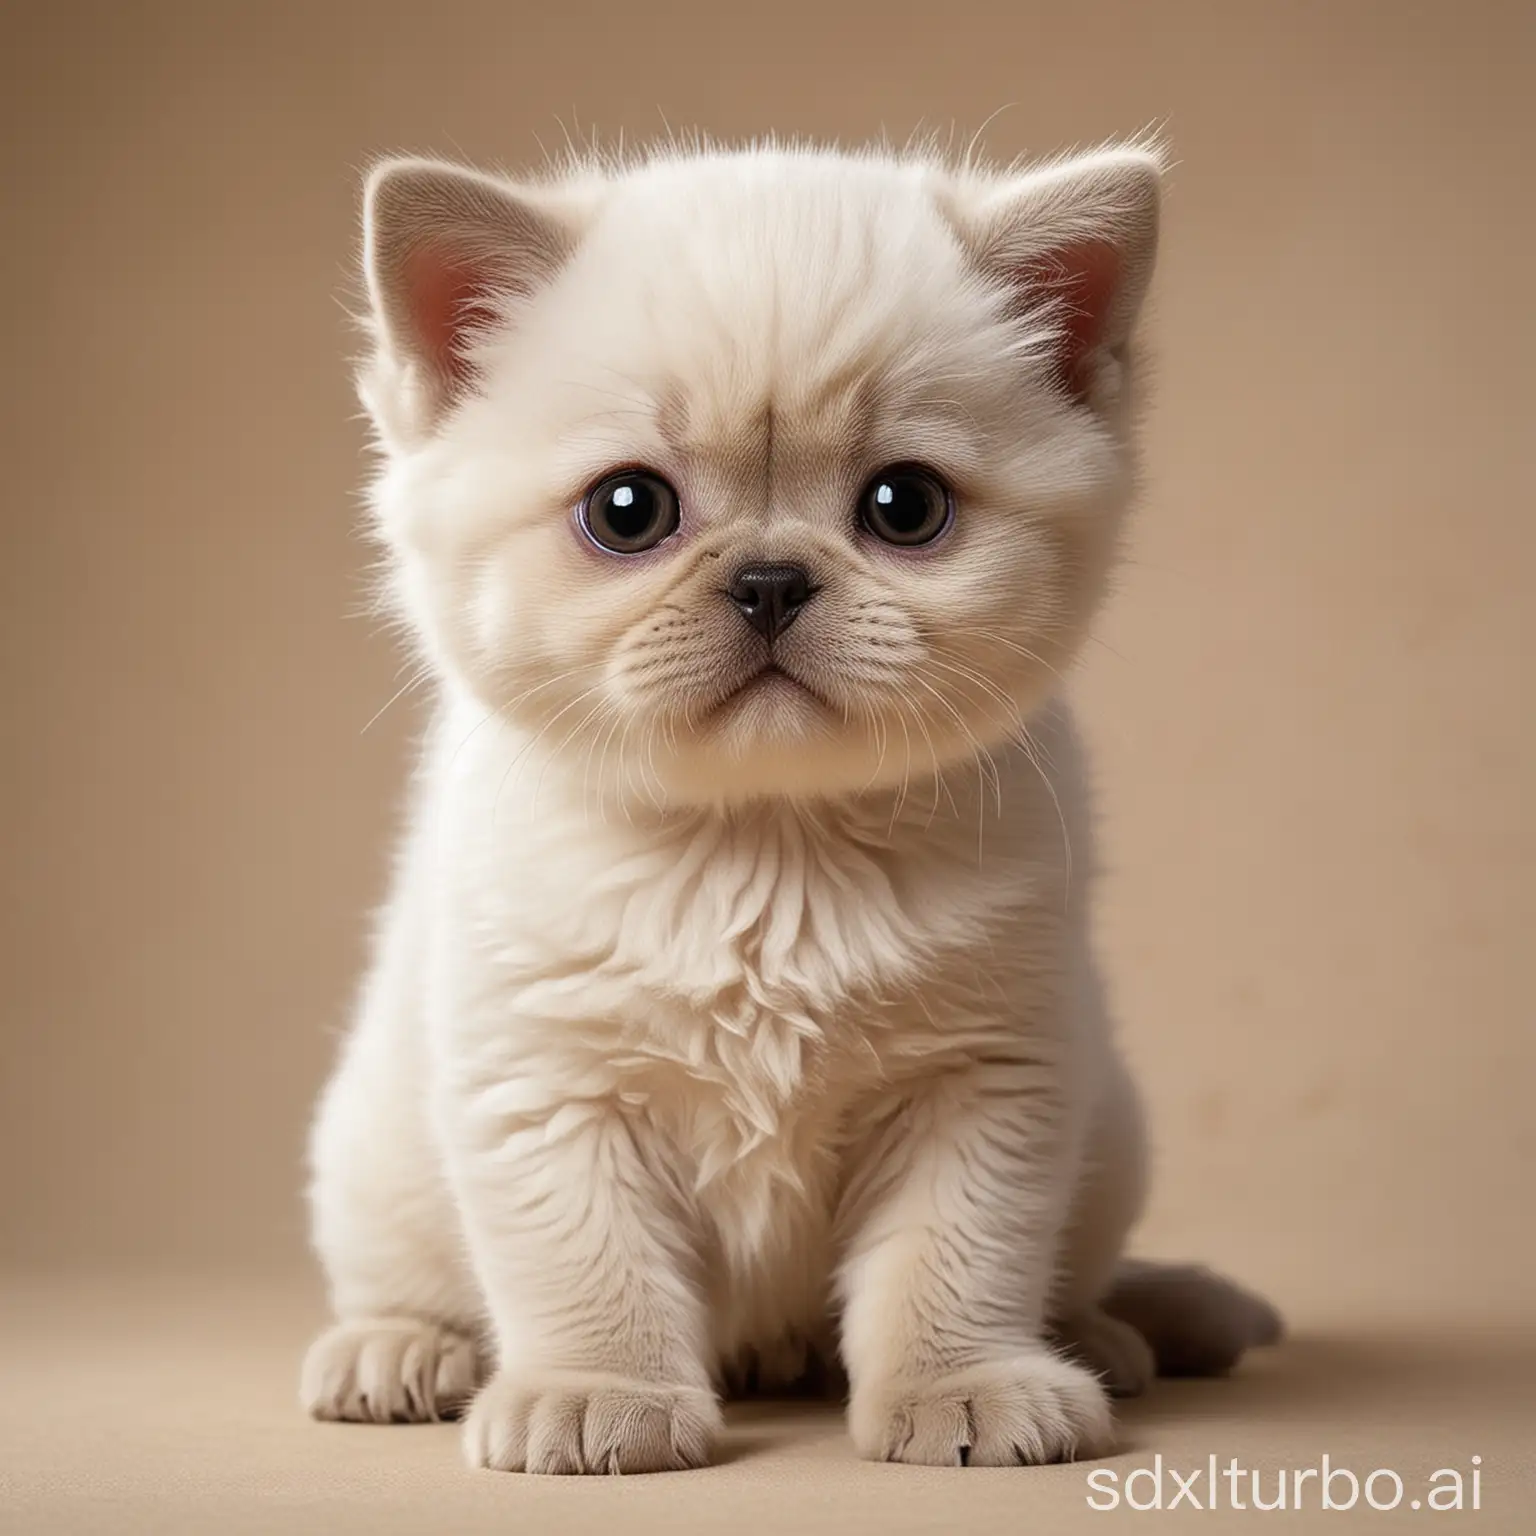 Whimsical-Hybrid-Kitten-British-Shorthair-Cat-with-King-Charles-Spaniel-Traits